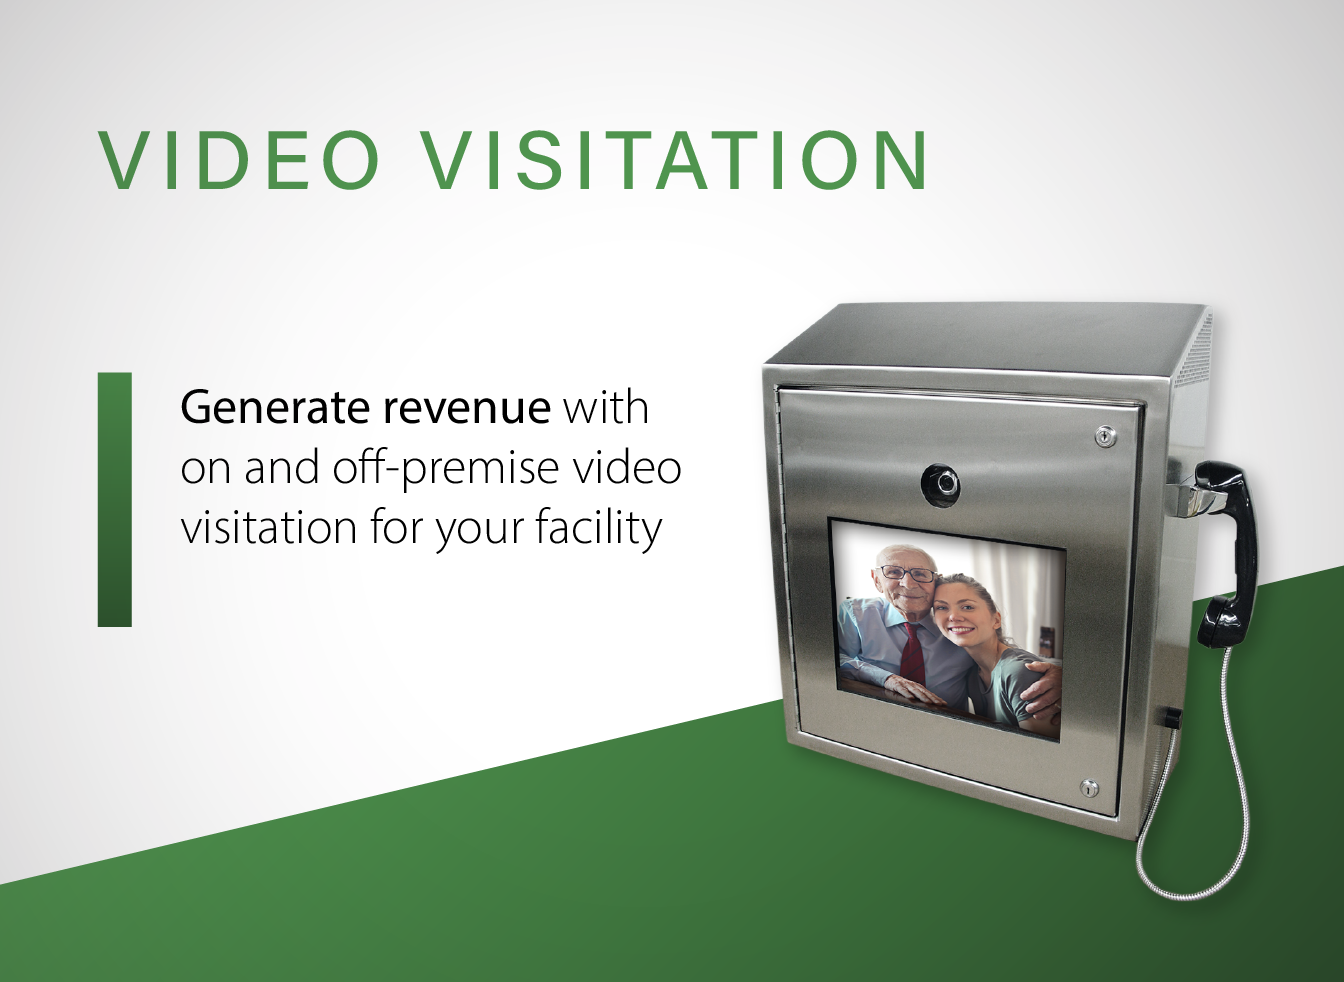 Video Visitation Systems